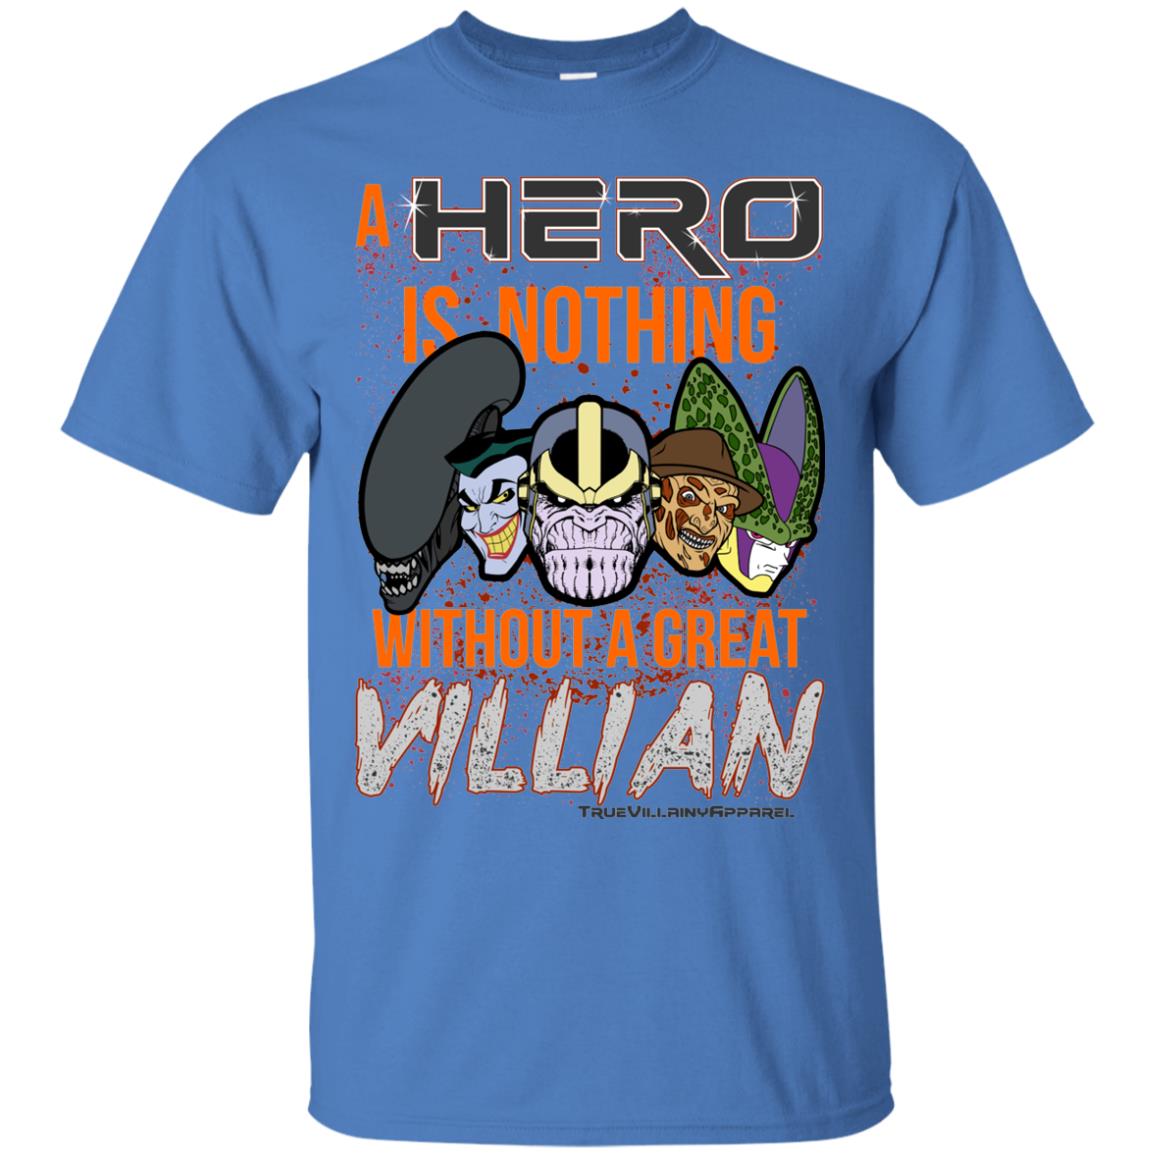 A Hero Is Only...Villain 100% Cotton T-Shirt